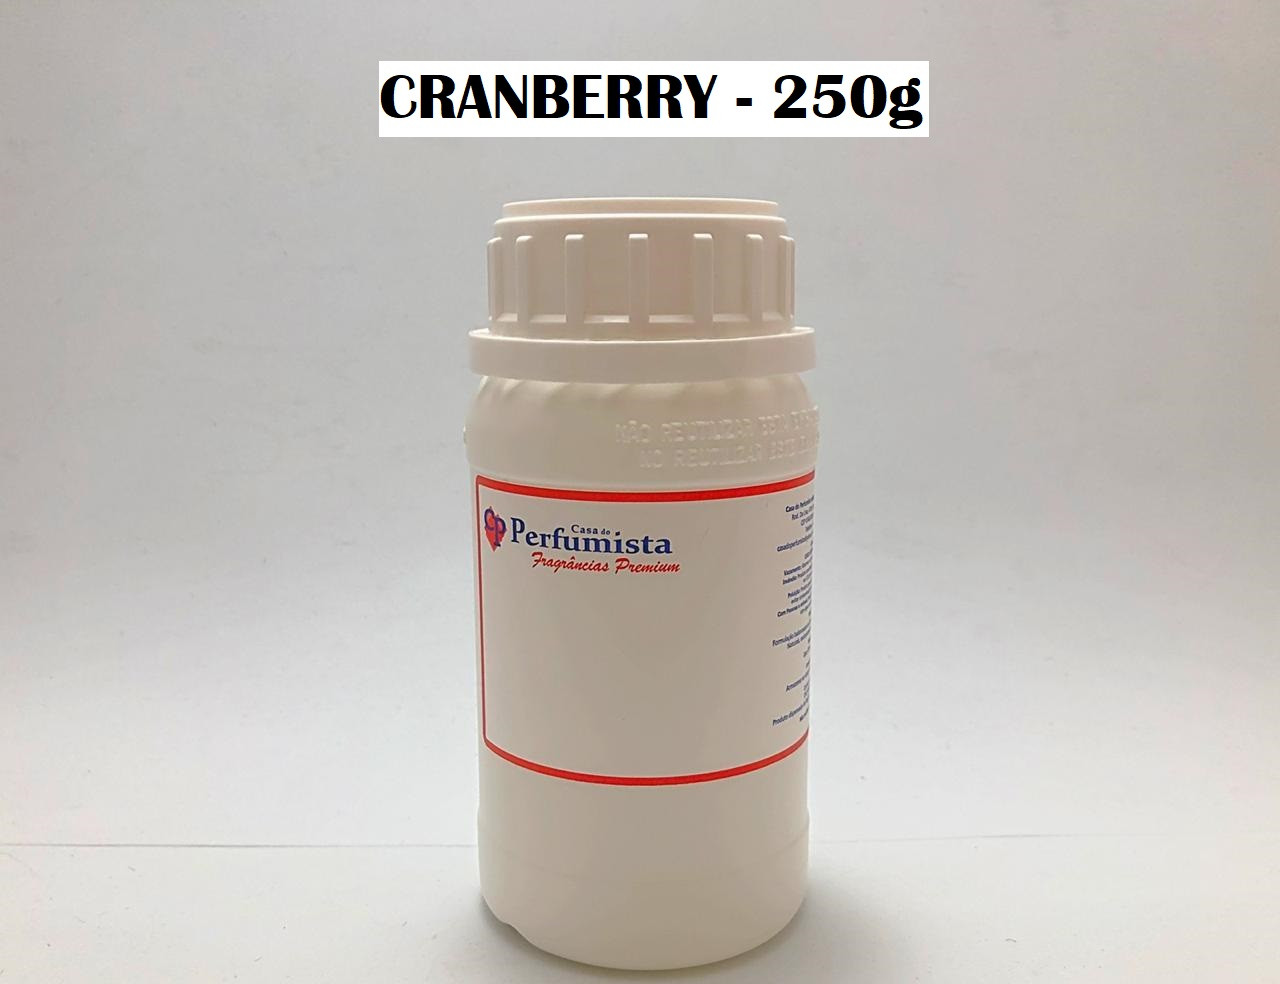 CRANBERRY - 250g